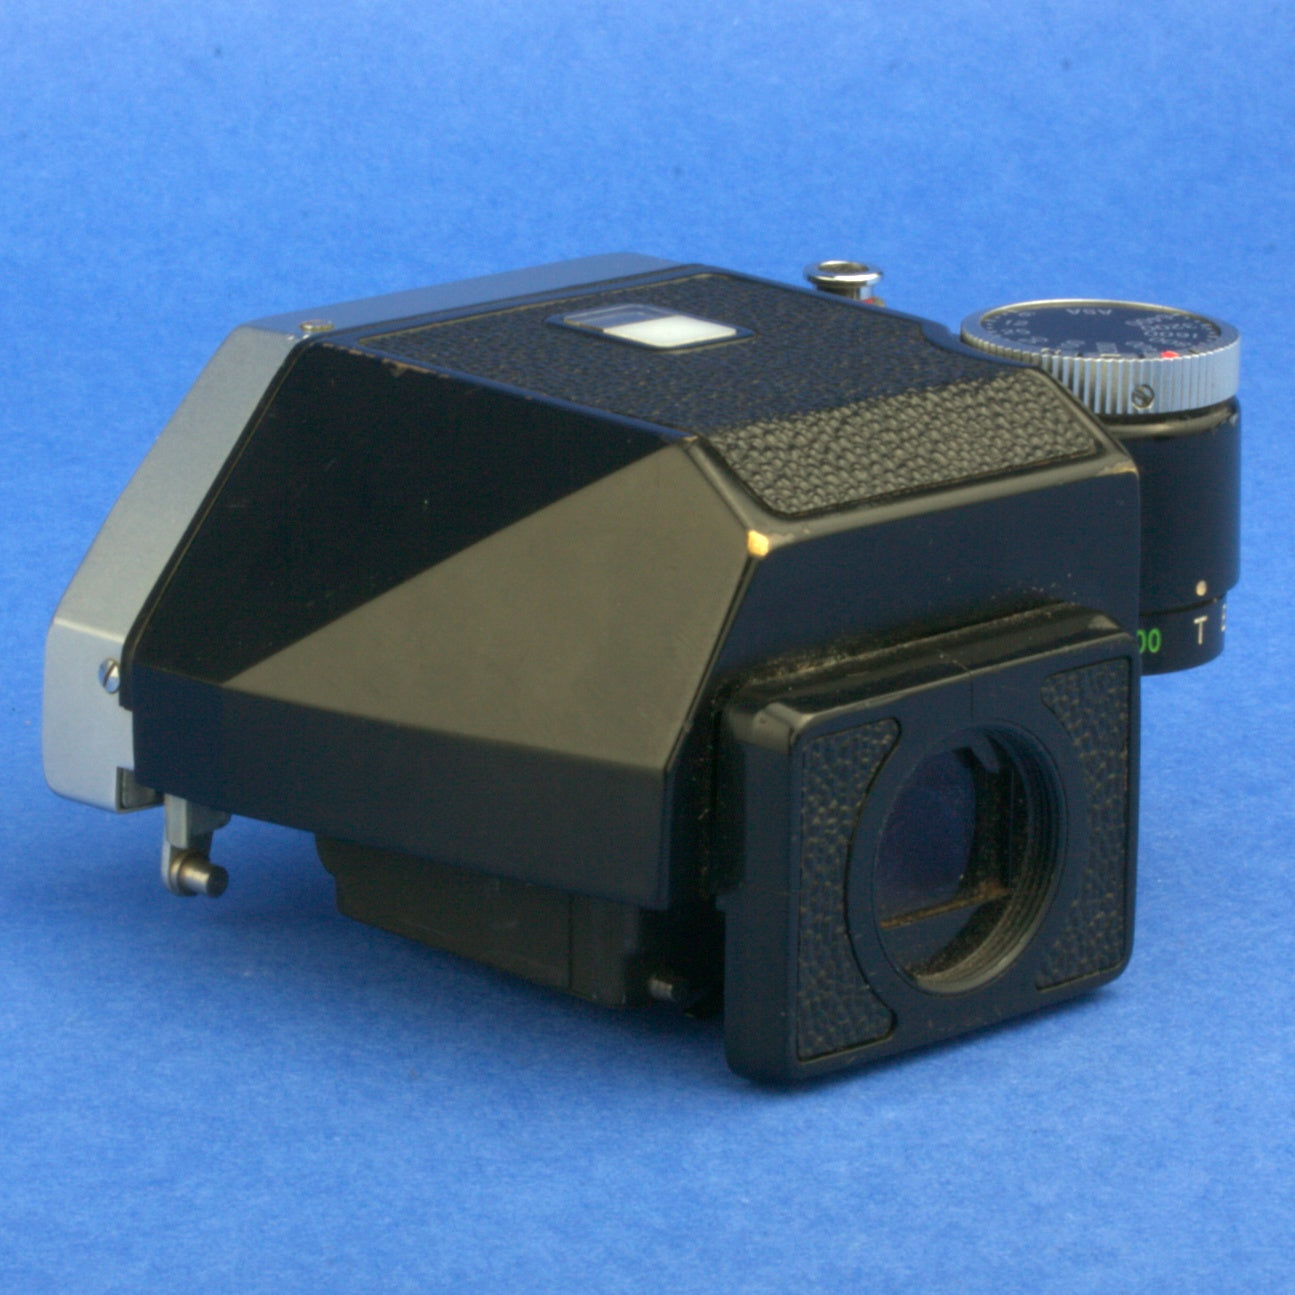 Nikon F Photomic FTN Finder